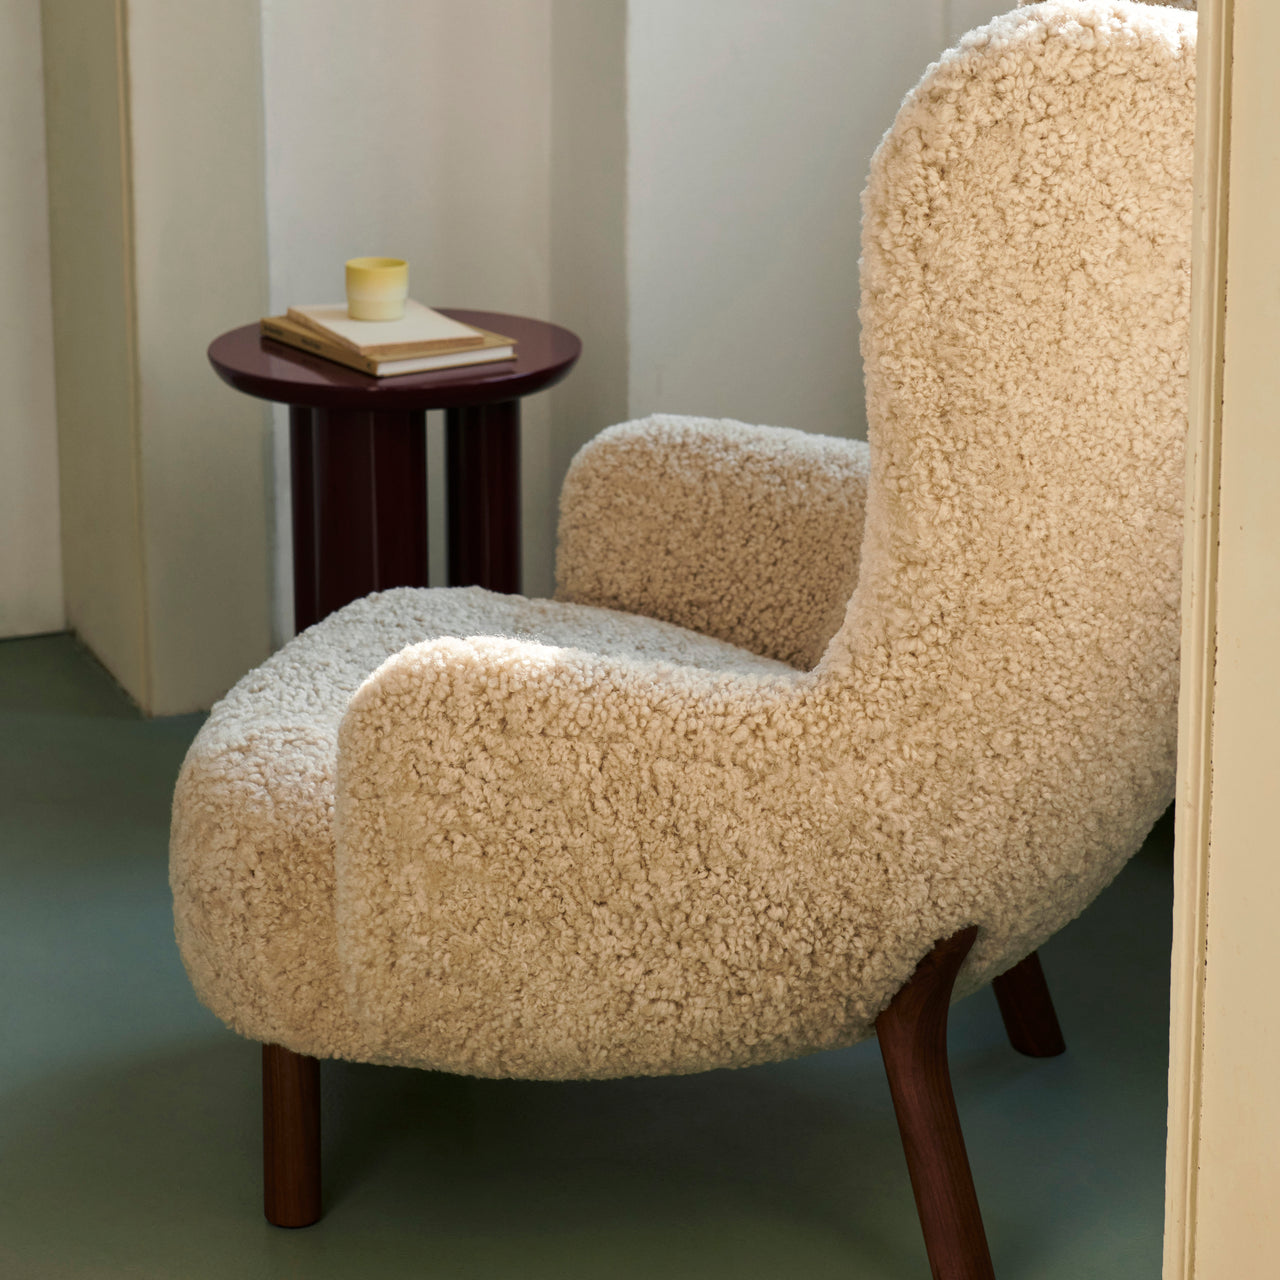 Petra Lounge Chair VB3